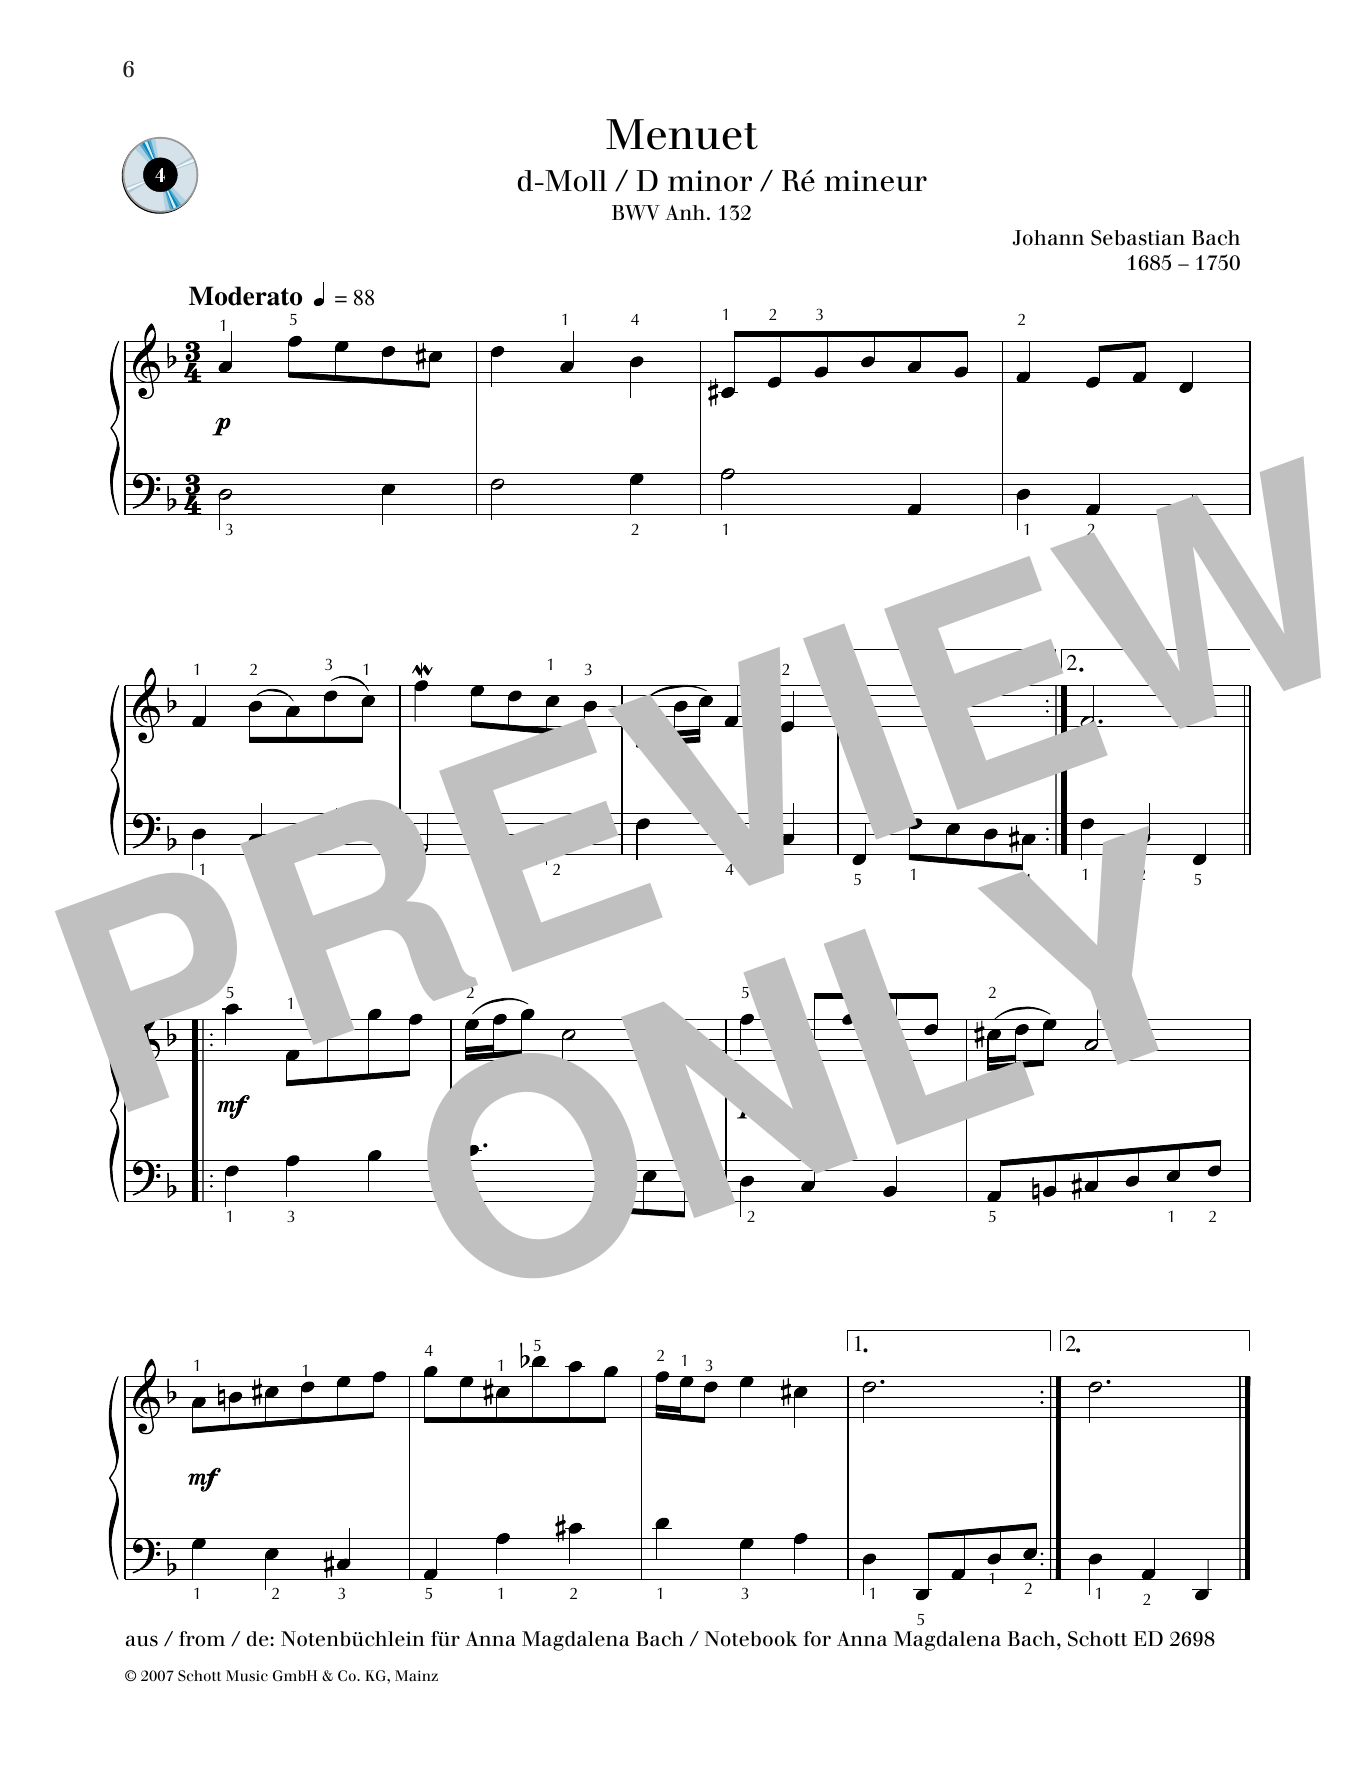 Johann Sebastian Bach Minuet D minor Sheet Music Notes & Chords for Piano Solo - Download or Print PDF